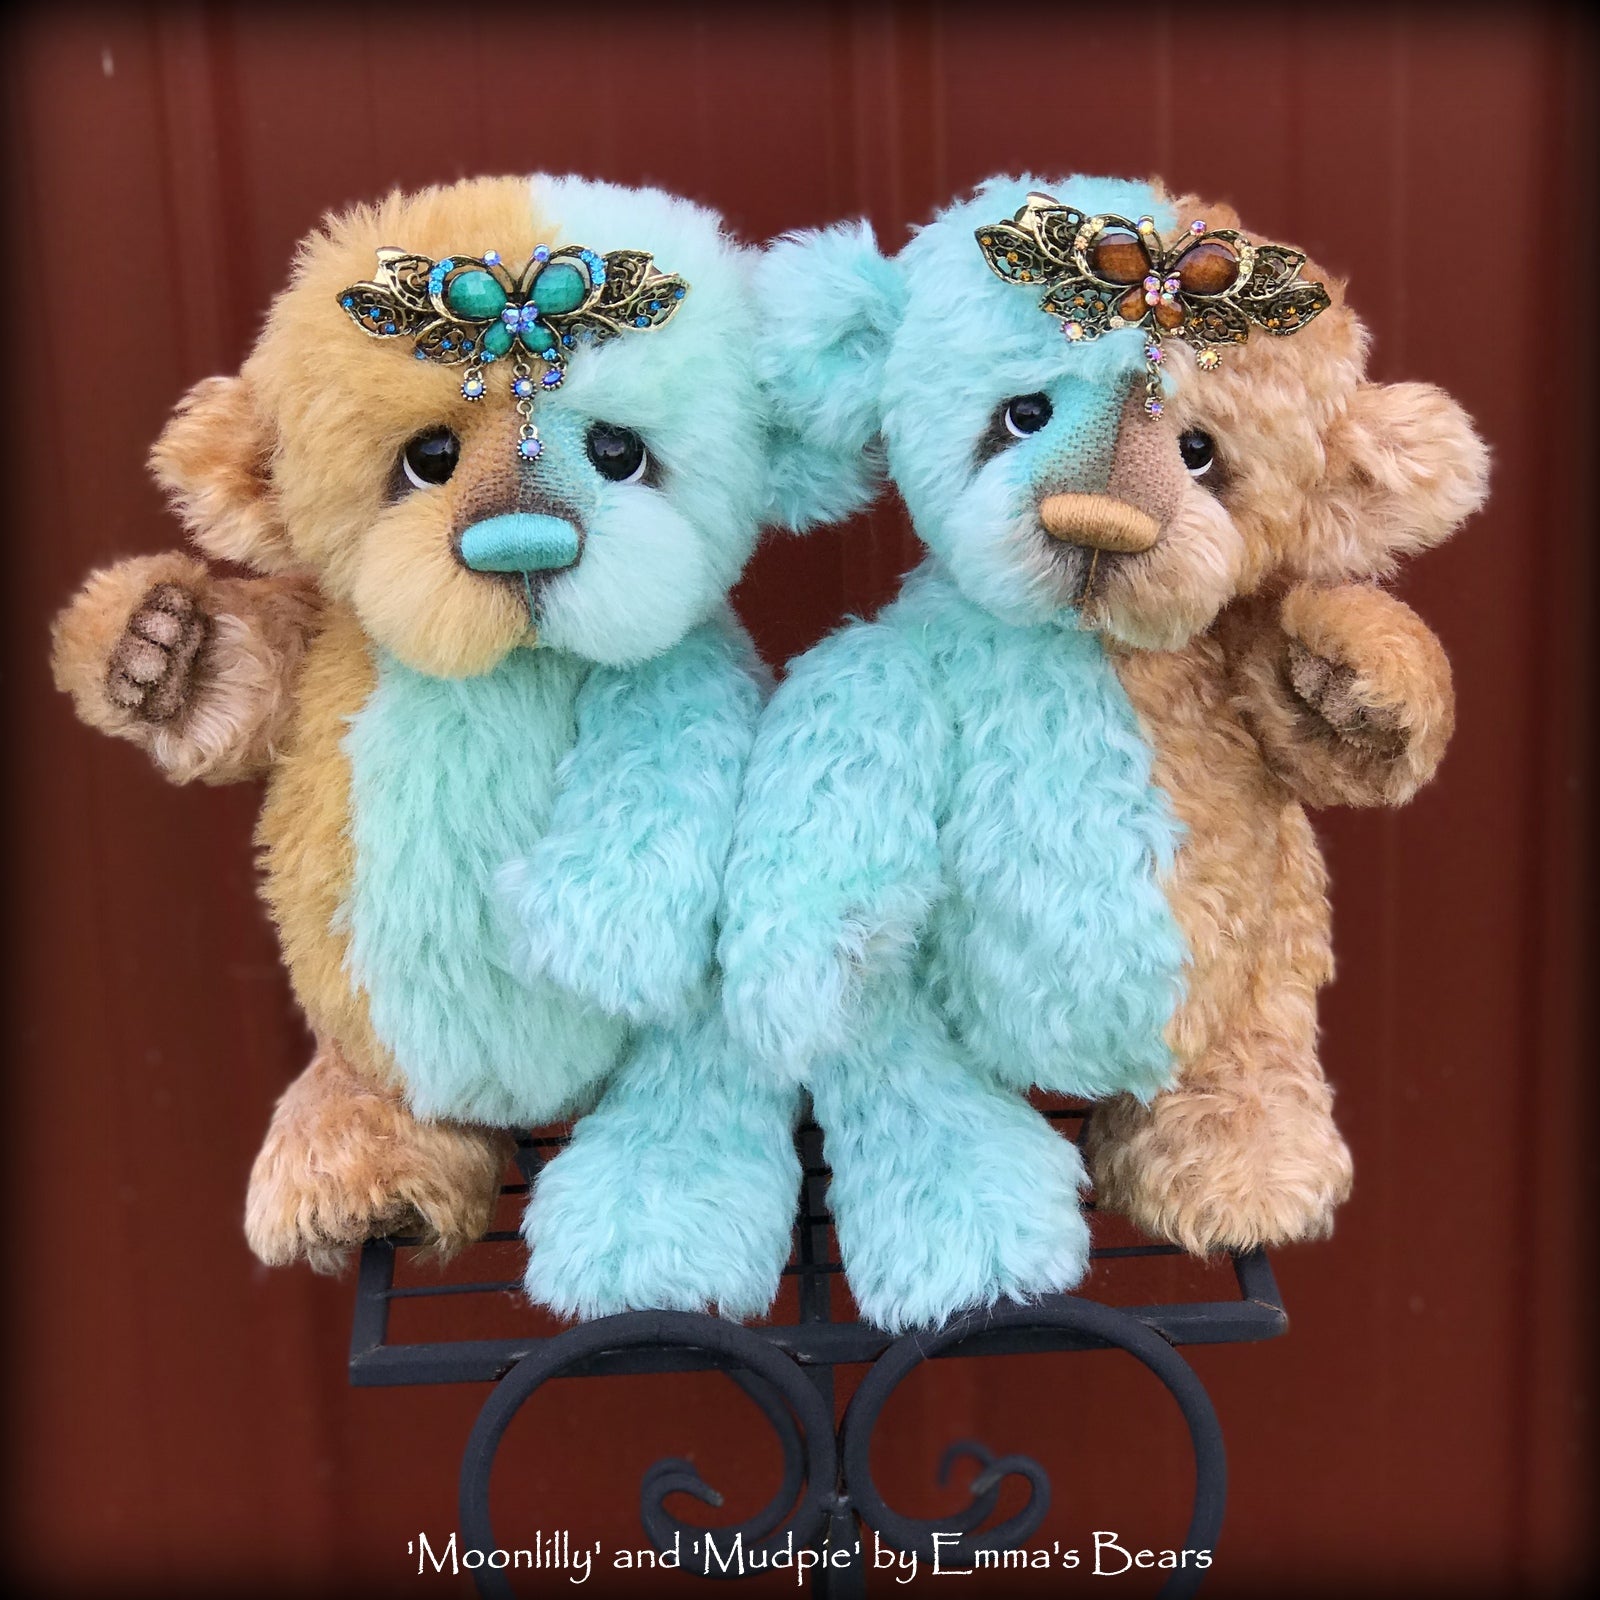 Moonlilly - 10" Mohair and Alpaca artist bear by Emma's Bears - OOAK